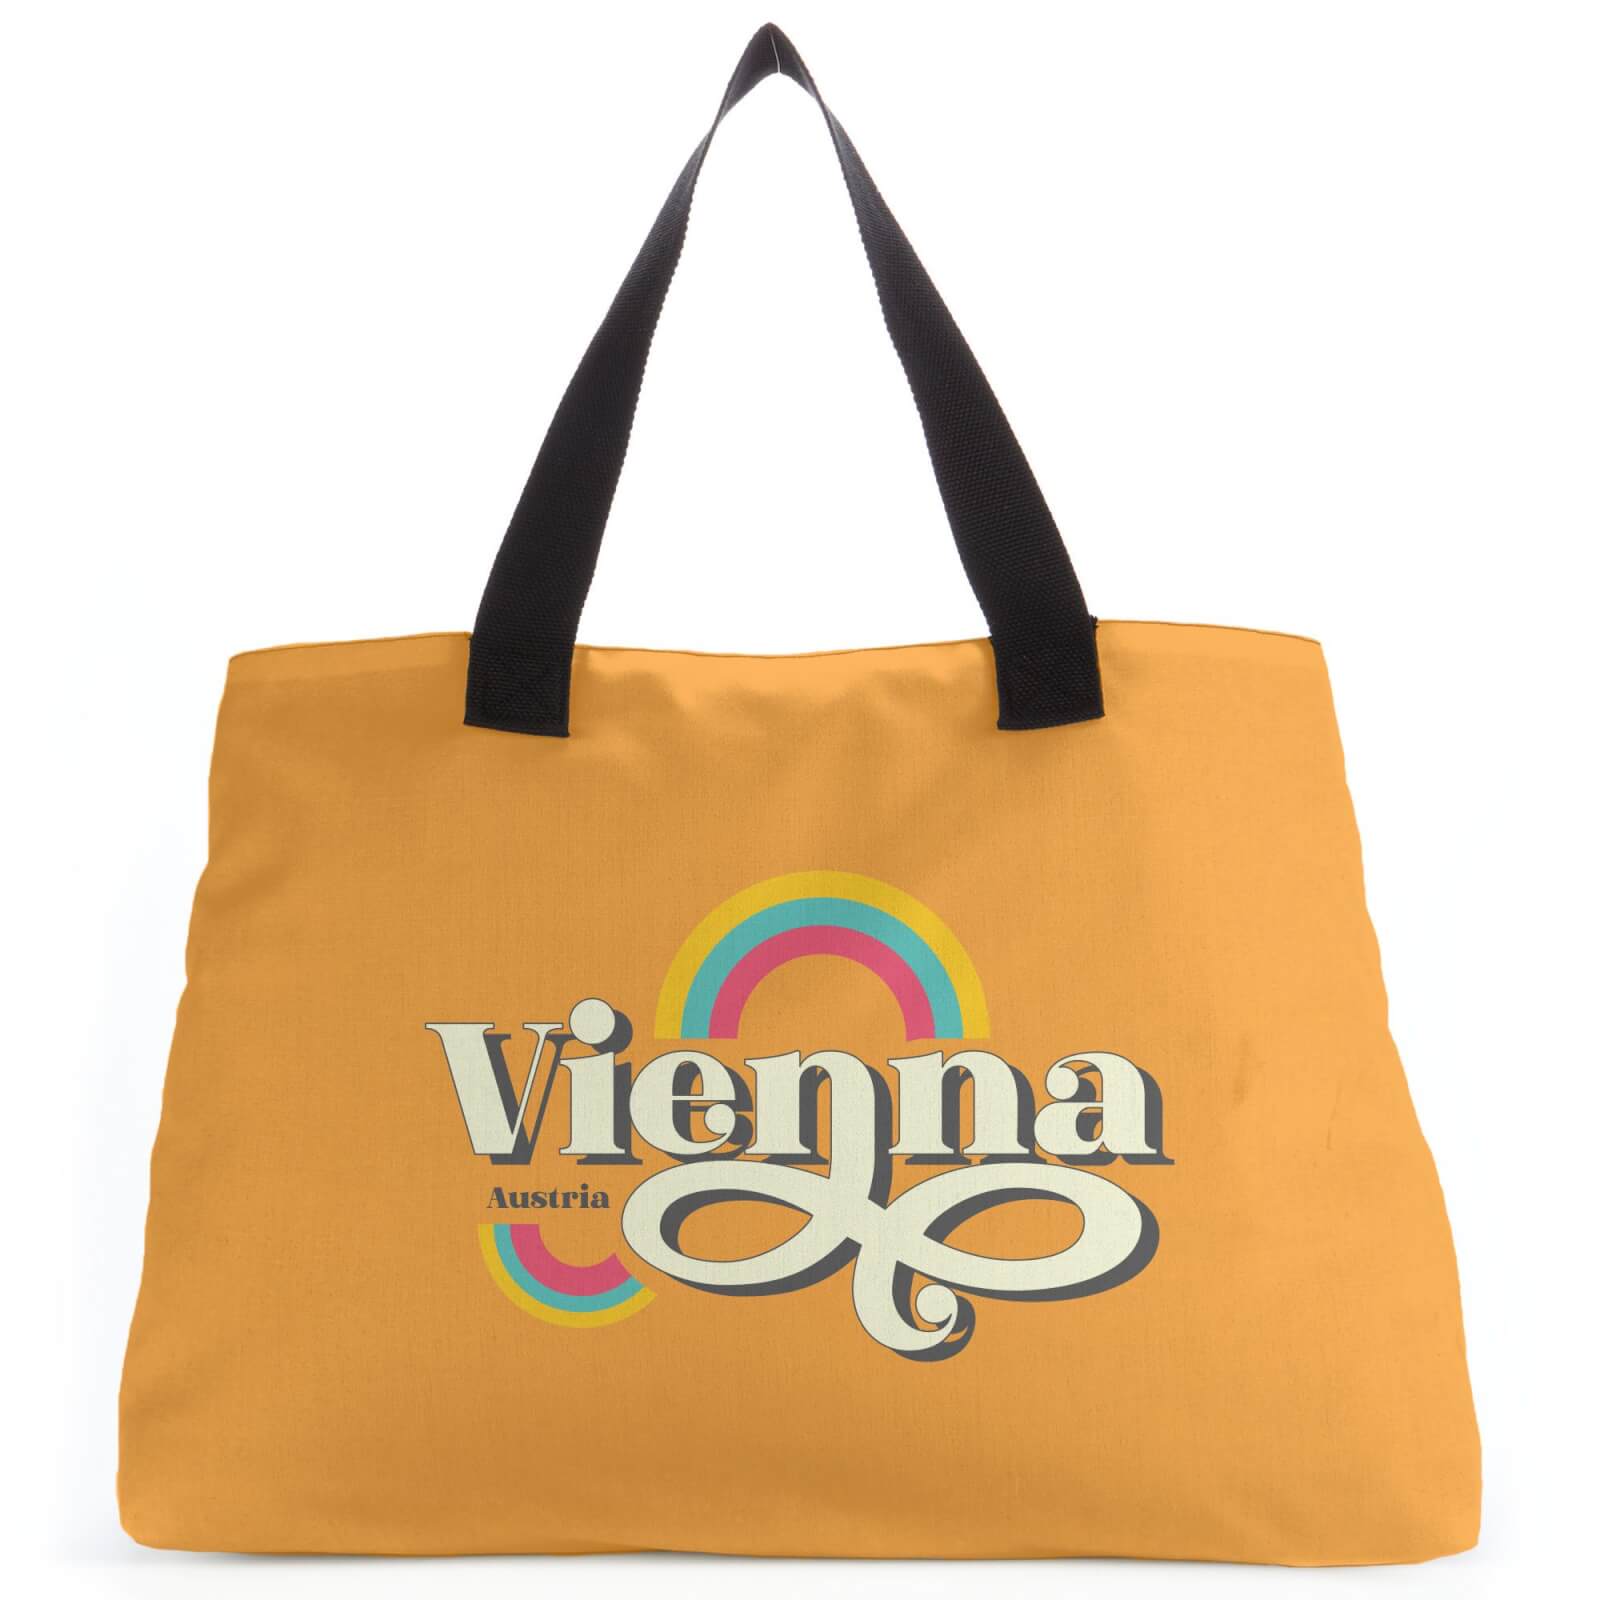 Vienna Tote Bag